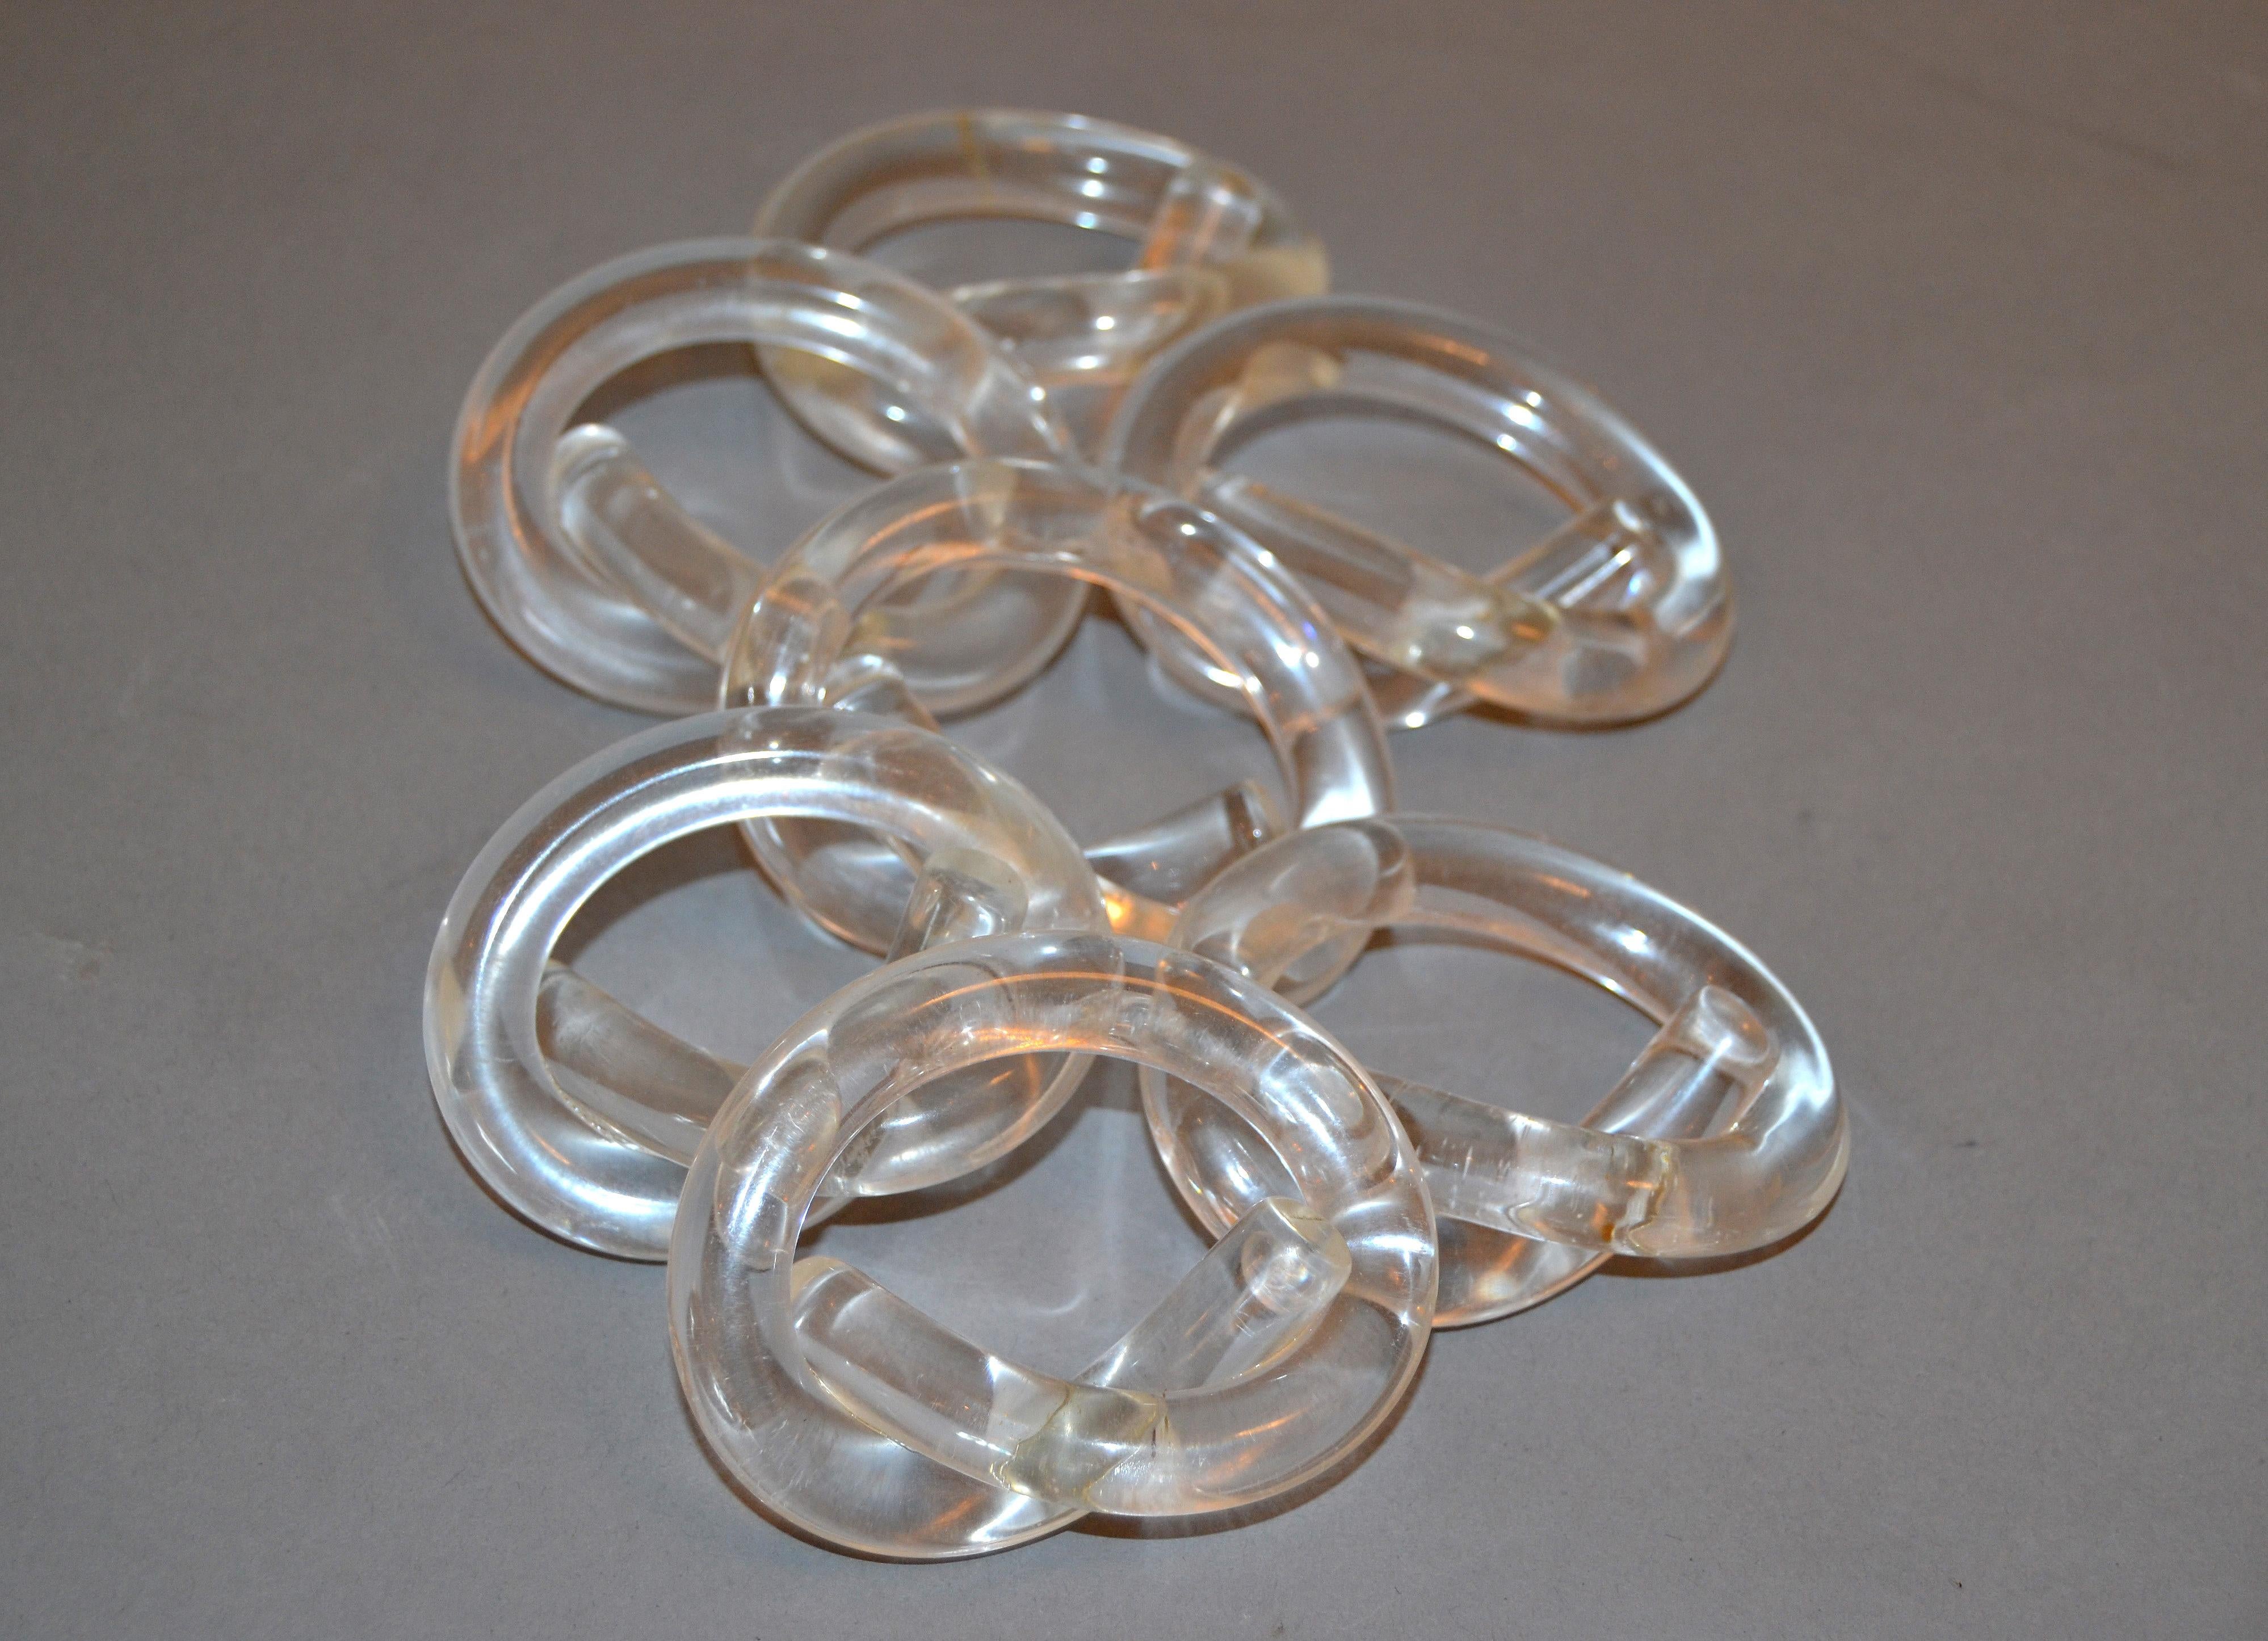 Beautiful set of seven Dorothy Thorpe Lucite napkin rings in pretzel shape.